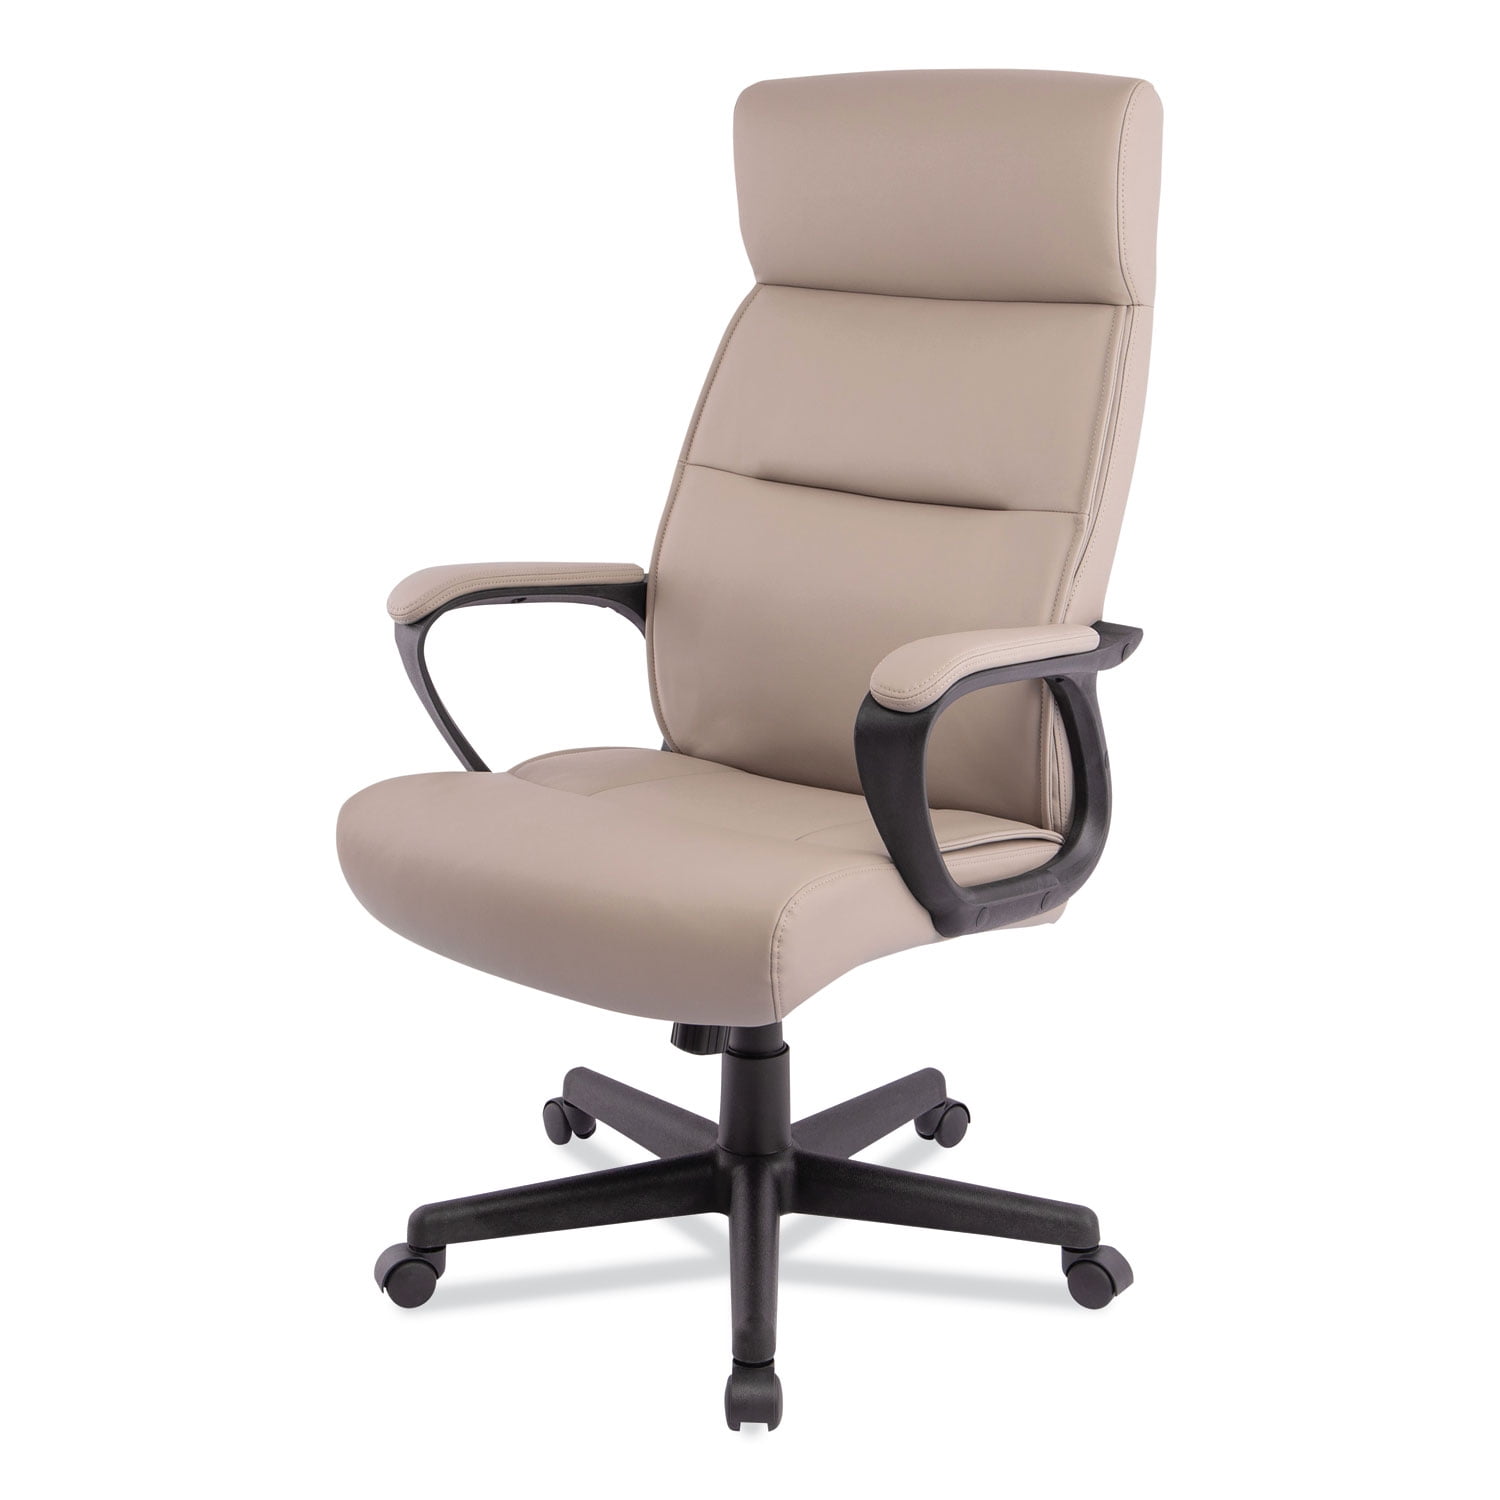 STOBAZA Chair Air Rod Heavy Duty Office Chair Swivel Chair Base